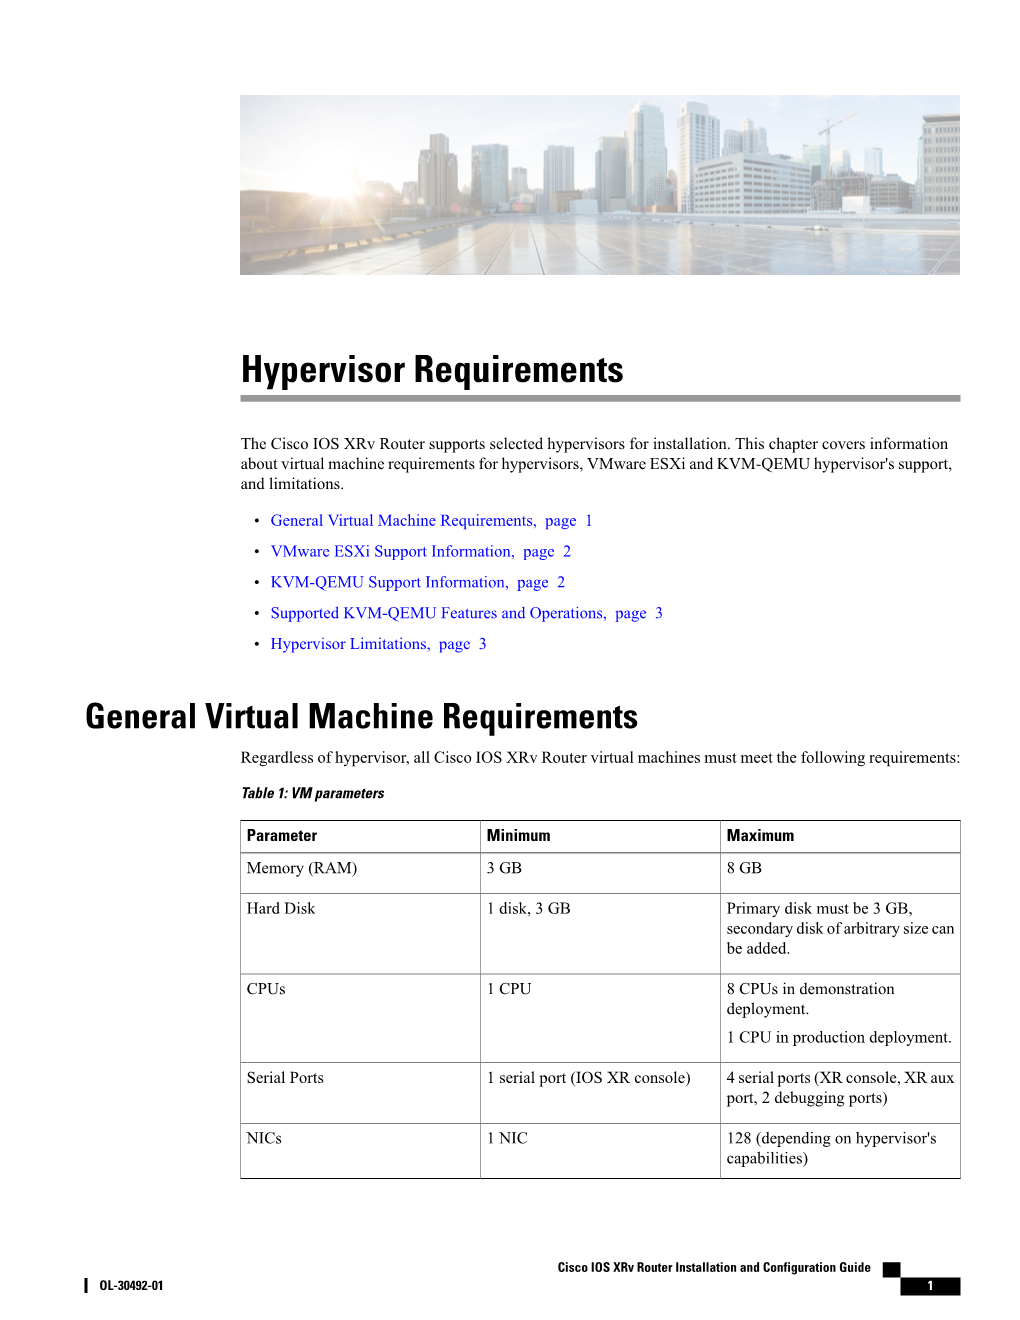 Hypervisor Requirements